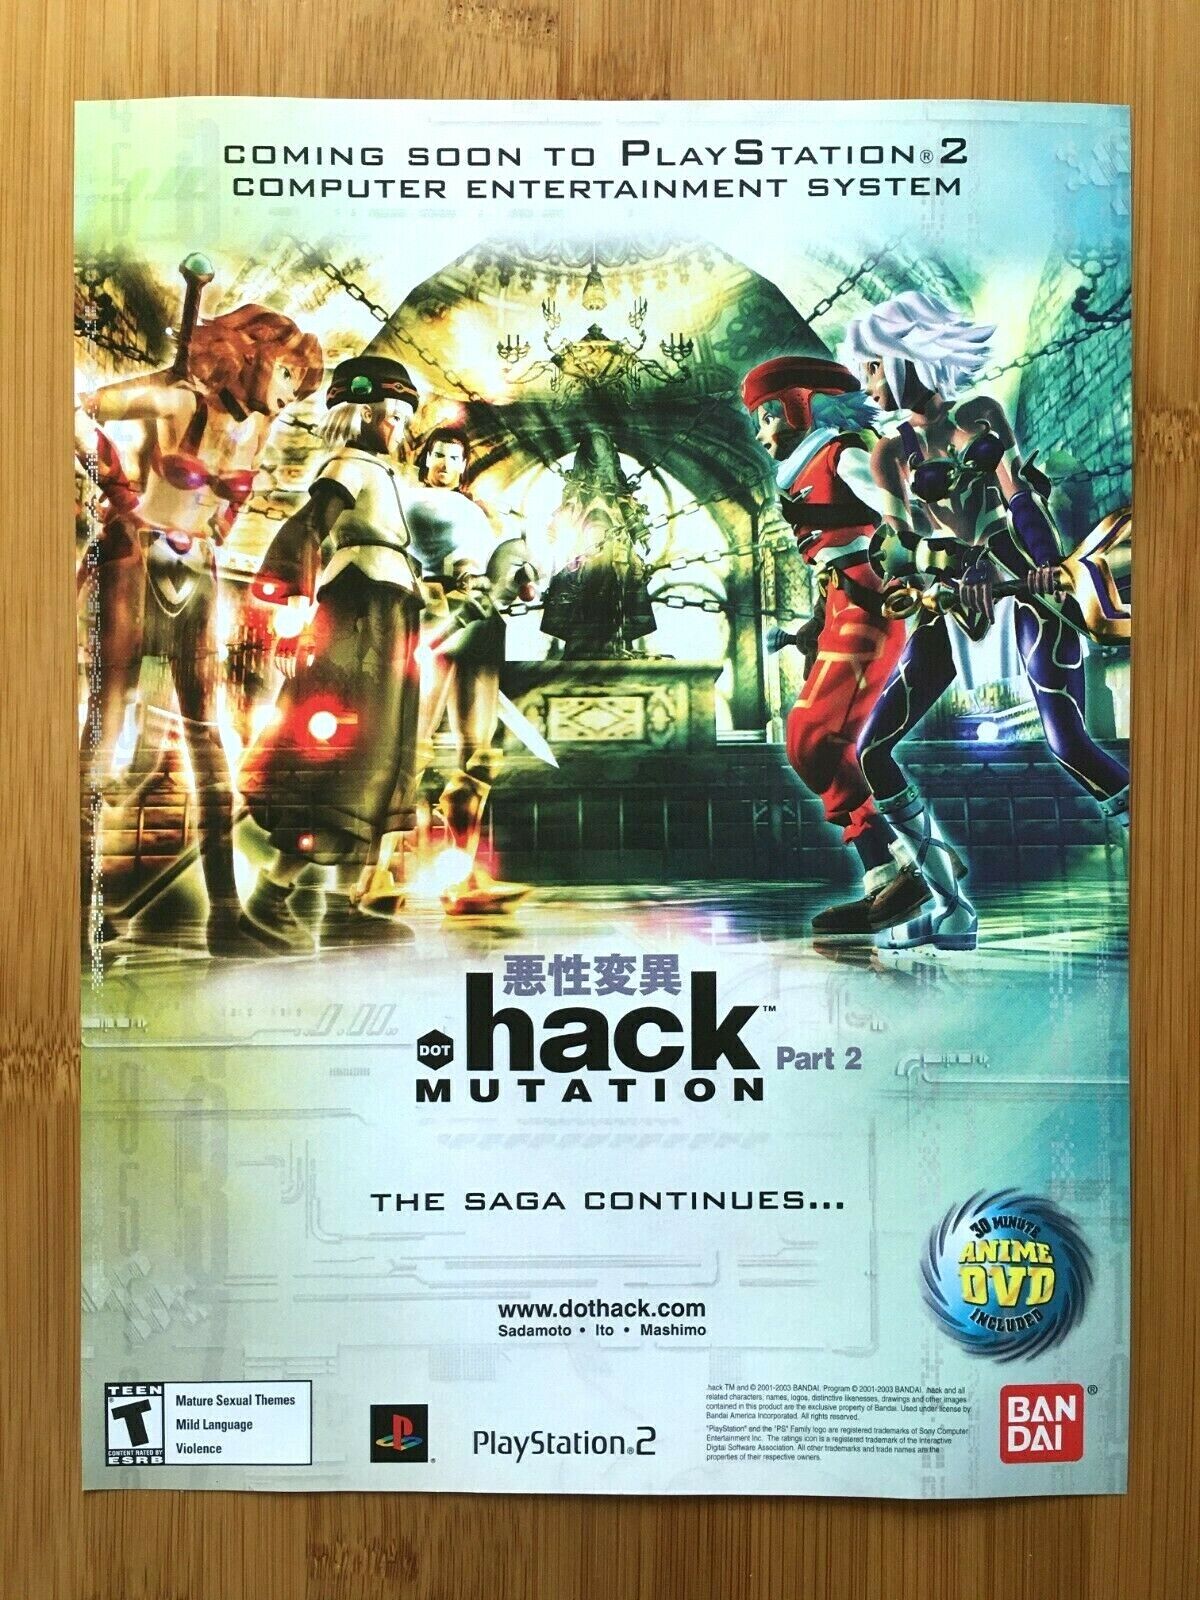 .hack 2 Mutation Playstation 2 PS2 2003 Print Ad/Poster Official Art Dot Hack